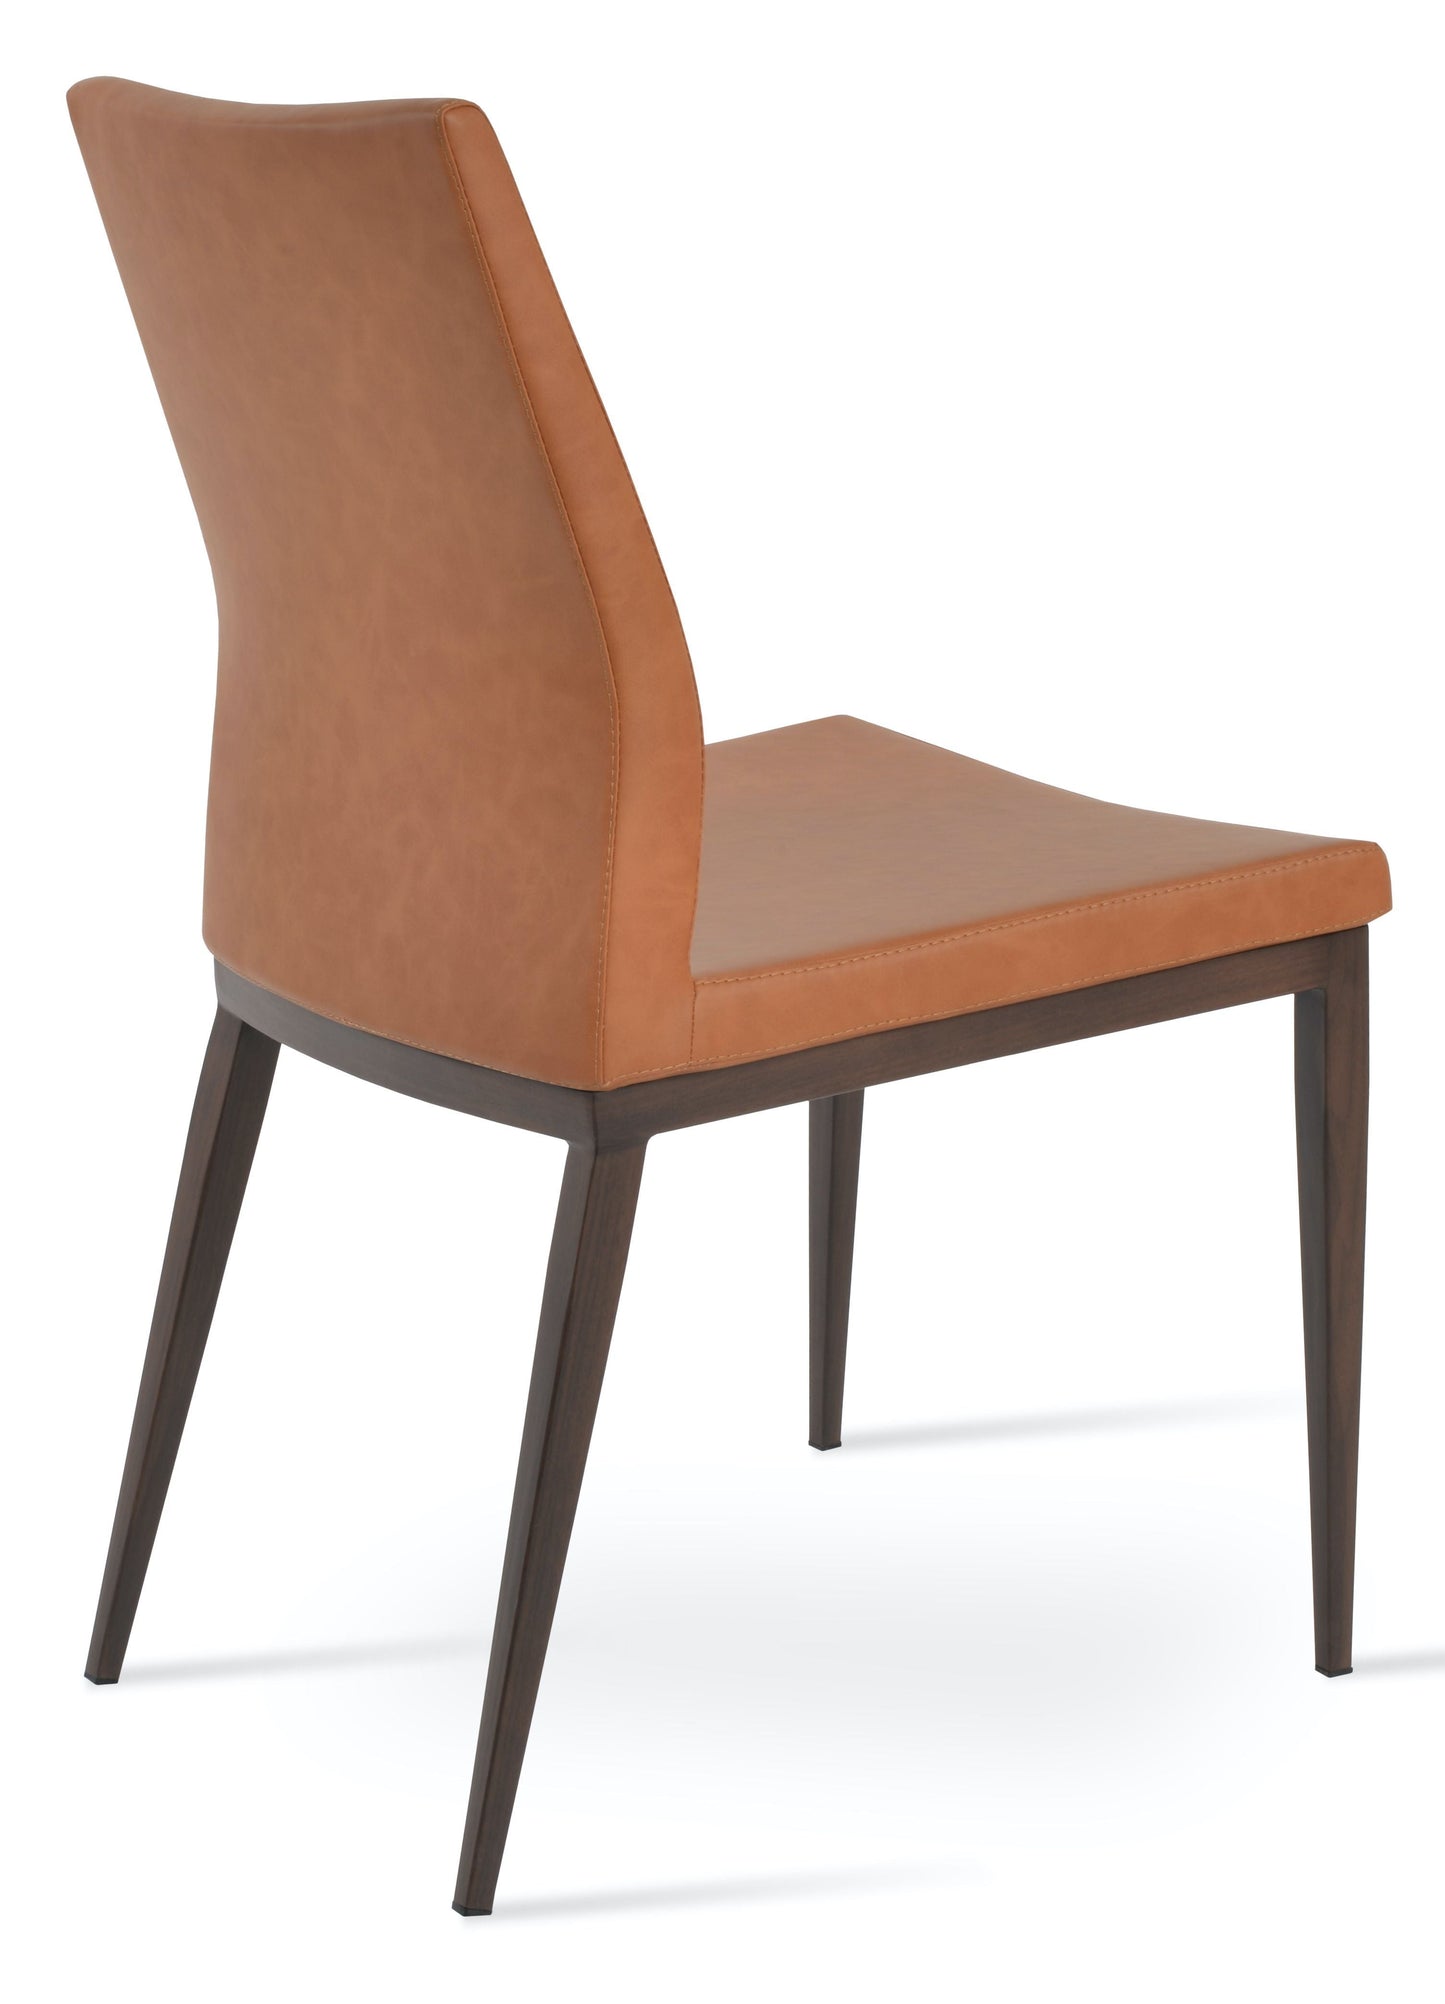 sohoConcept Pasha MW Chair Leather Flexible Back in American Walnut